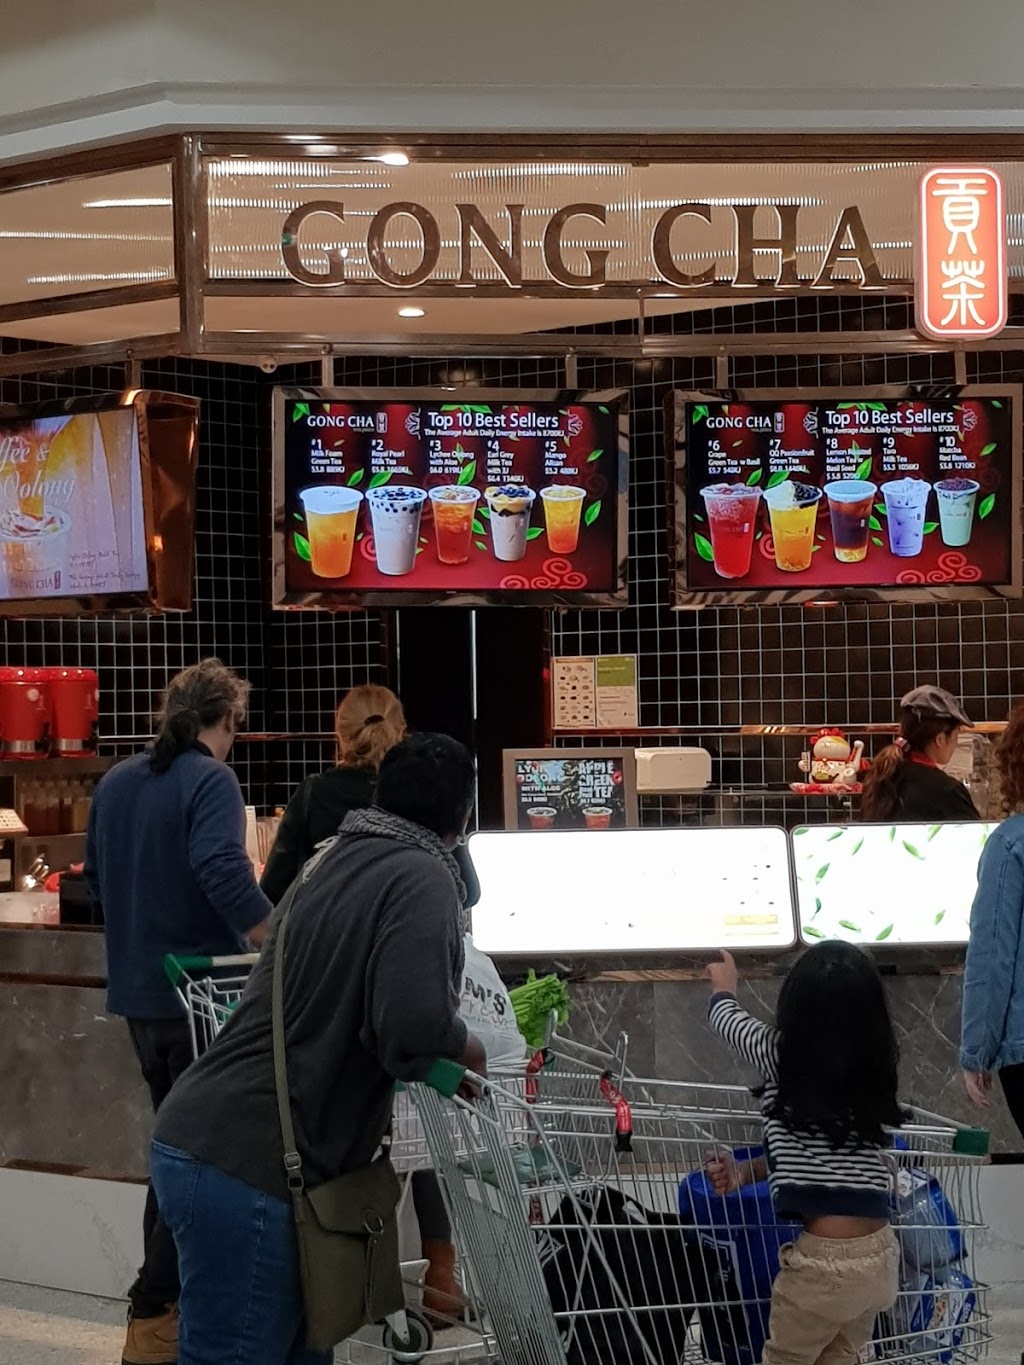 Gong Cha Penrith | cafe | Shop 023/585 High St, Penrith NSW 2750, Australia